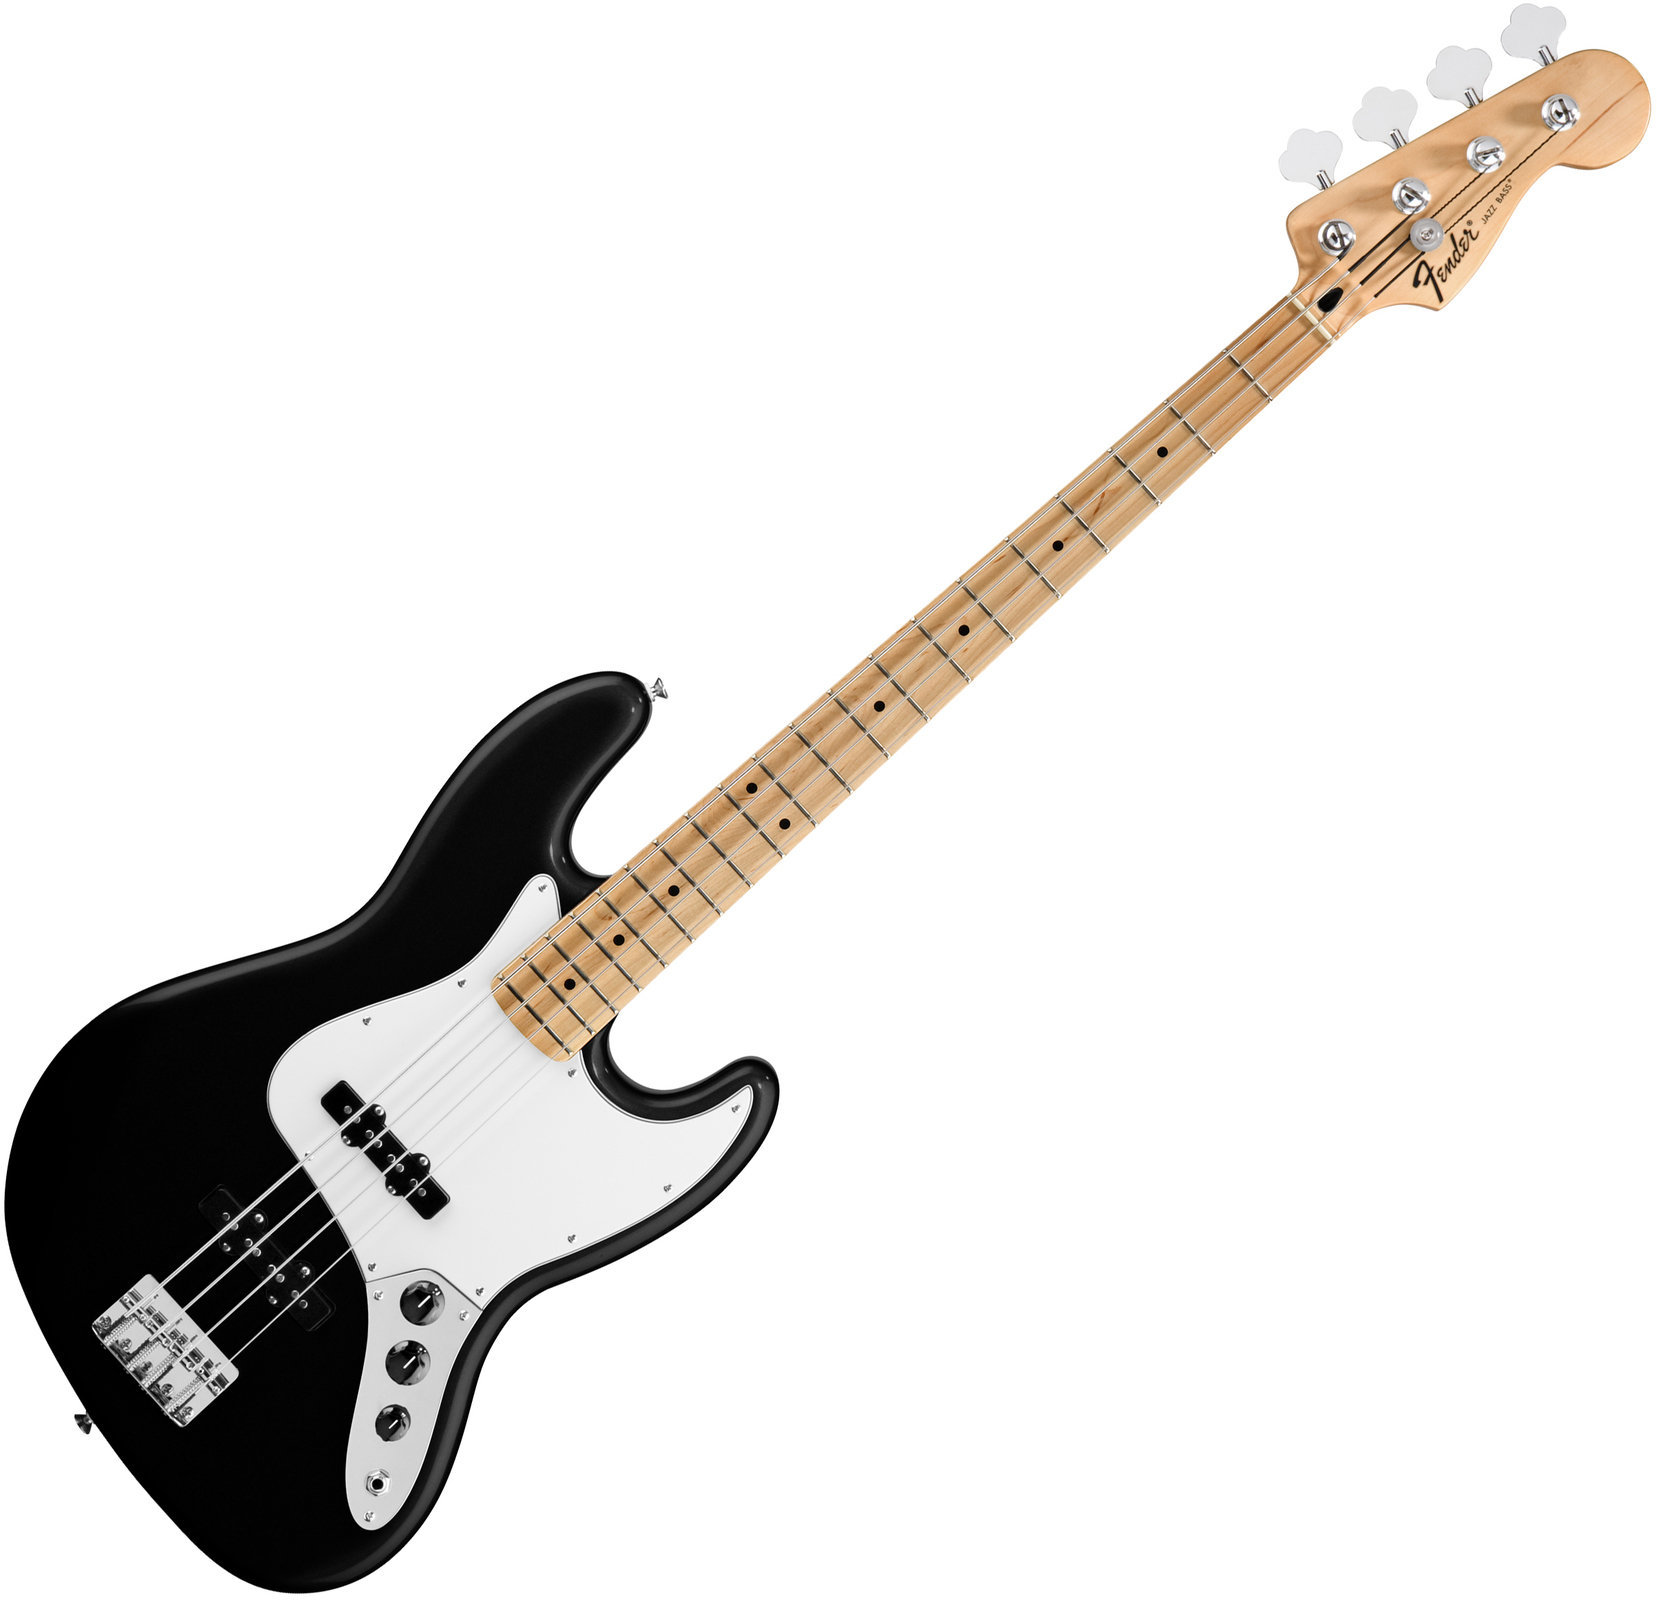 Basse électrique Fender Standard Jazz Bass MN Black